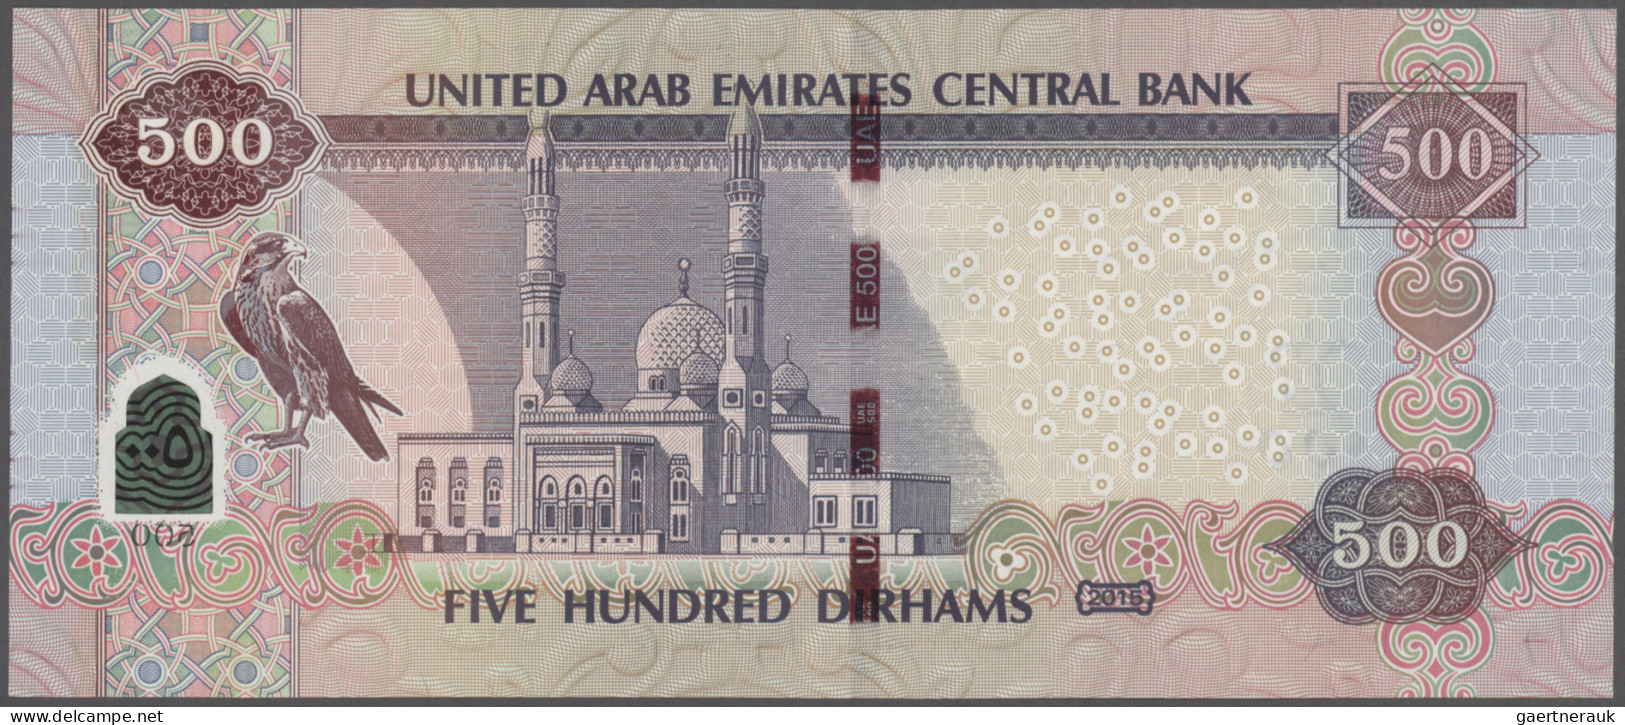 United Arab Emirates: United Arab Emirates Central Bank 500 Dirhams 2015 (AH1436 - United Arab Emirates